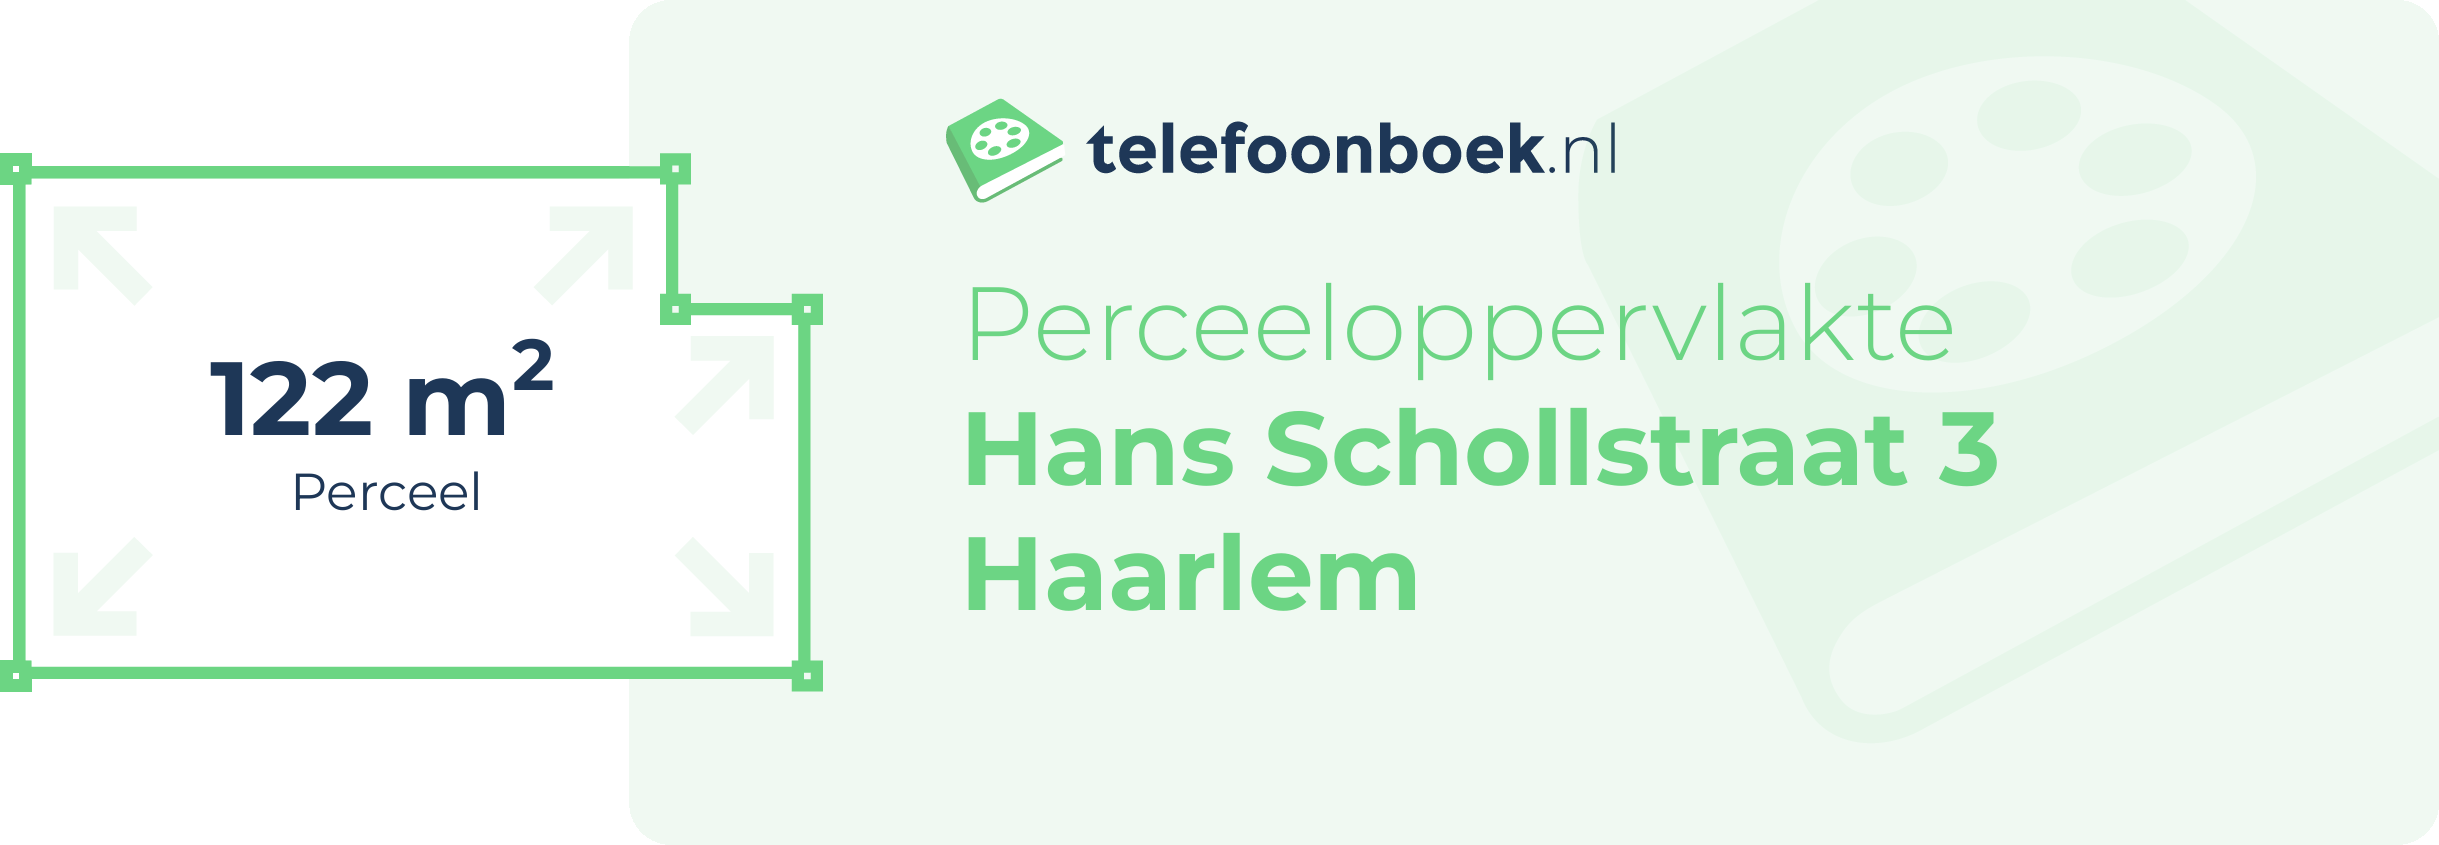 Perceeloppervlakte Hans Schollstraat 3 Haarlem